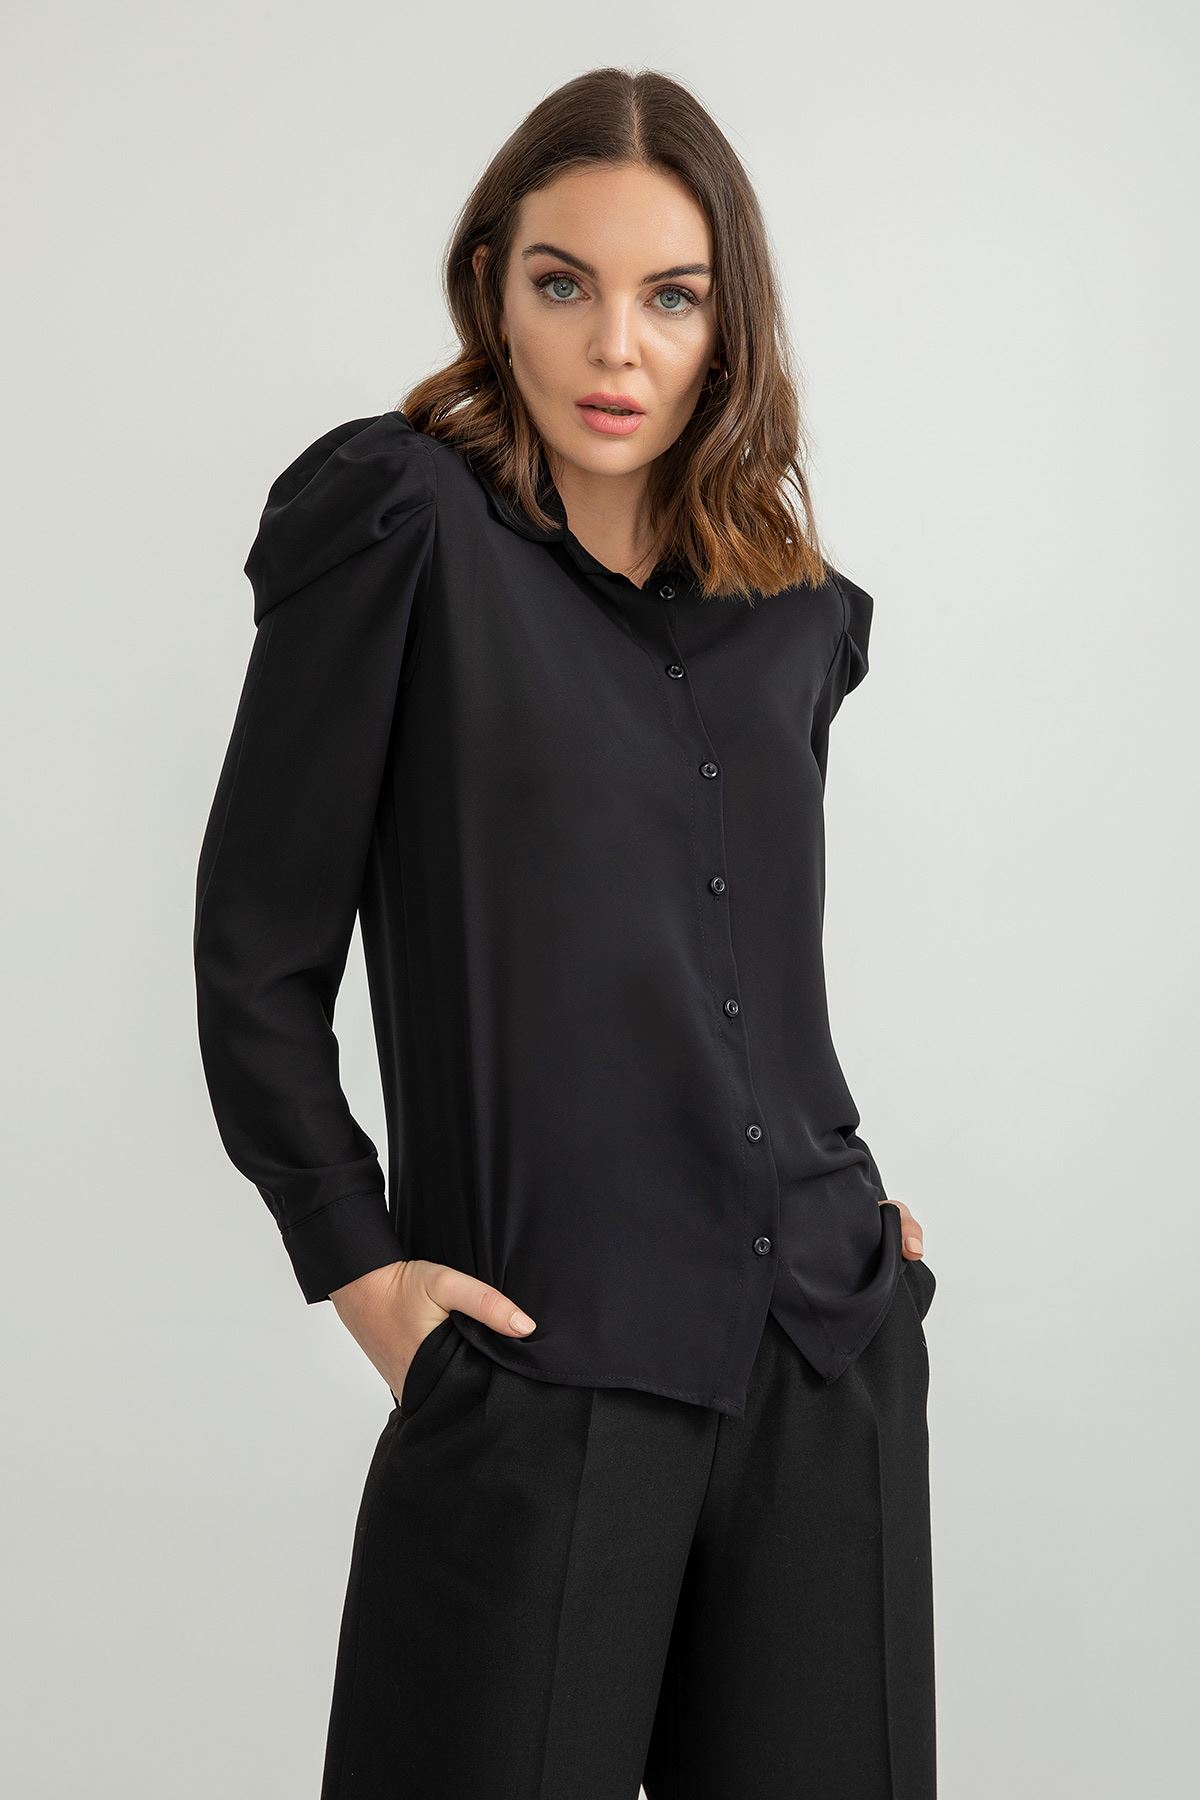 Jesica Fabric Long Sleeve Shirt Collar Classical Women'S Shirt - Black